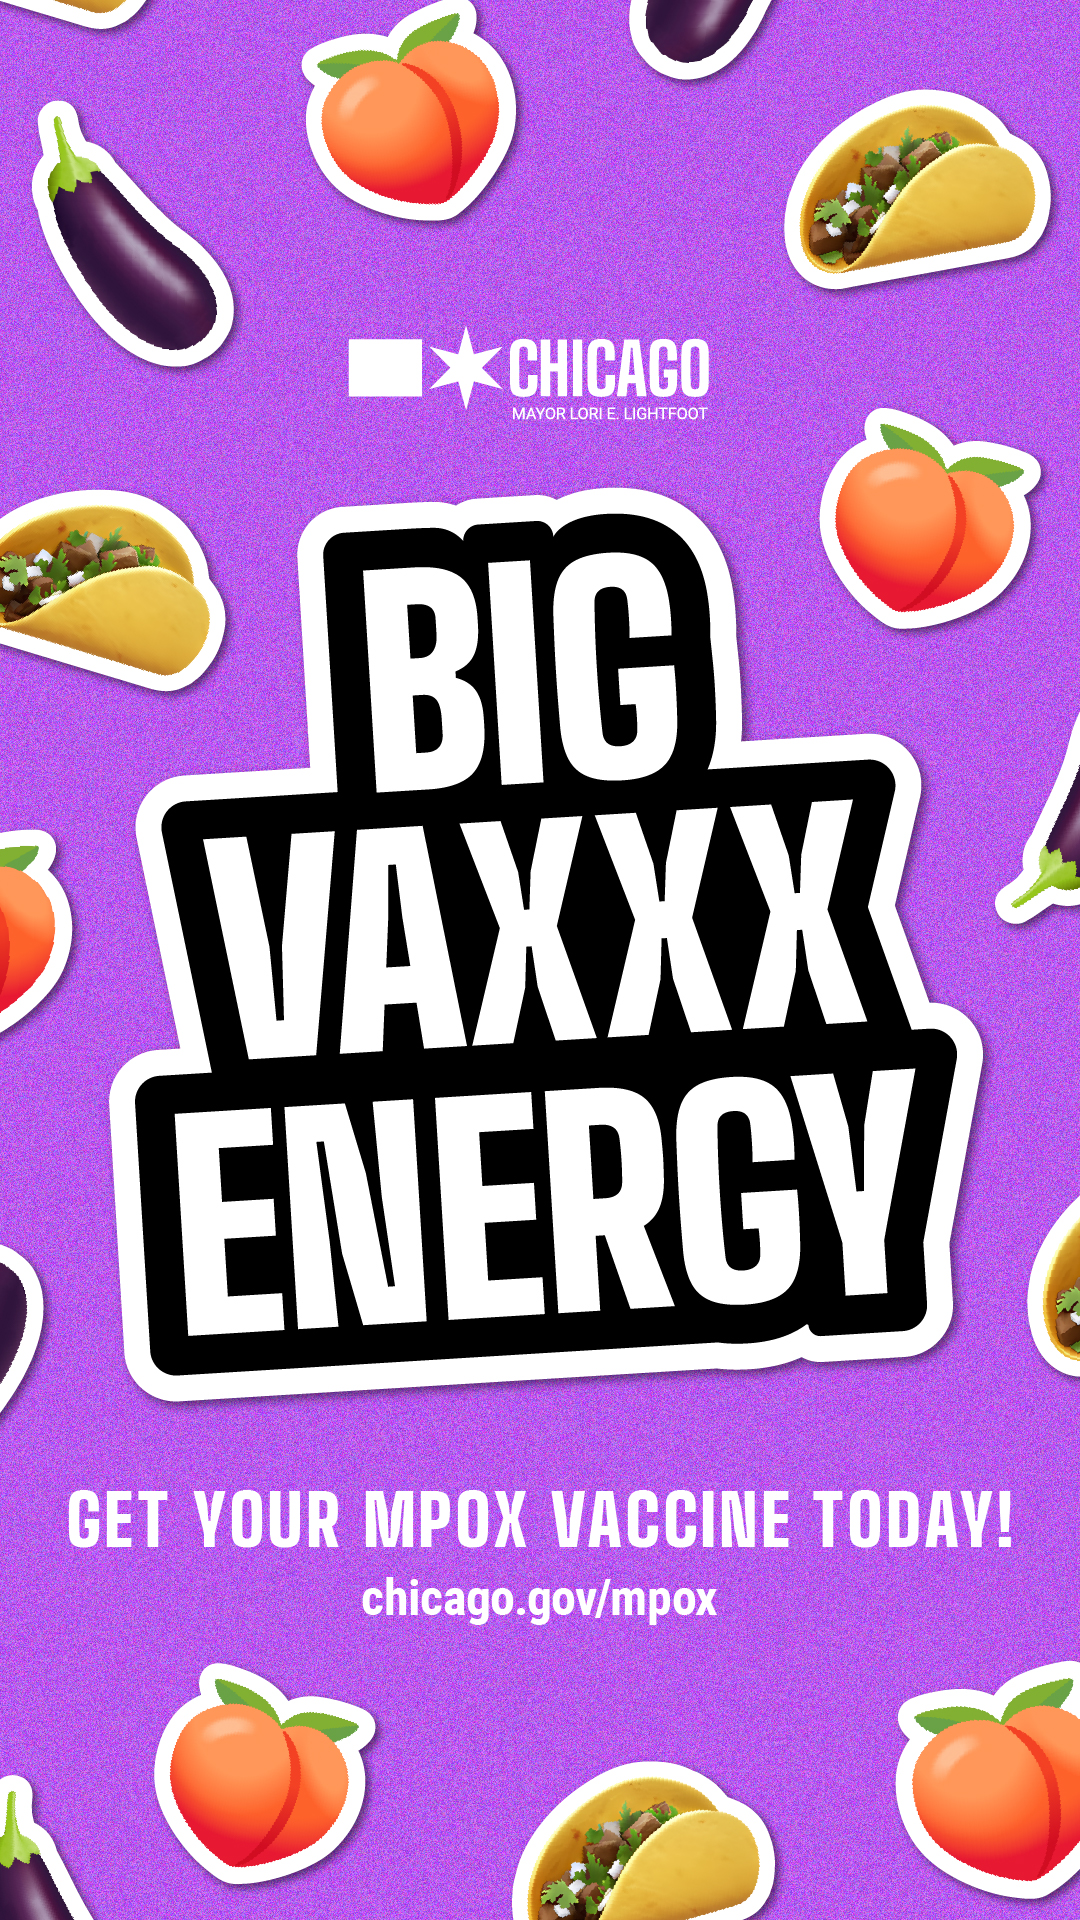 Big Vaxxx Energy